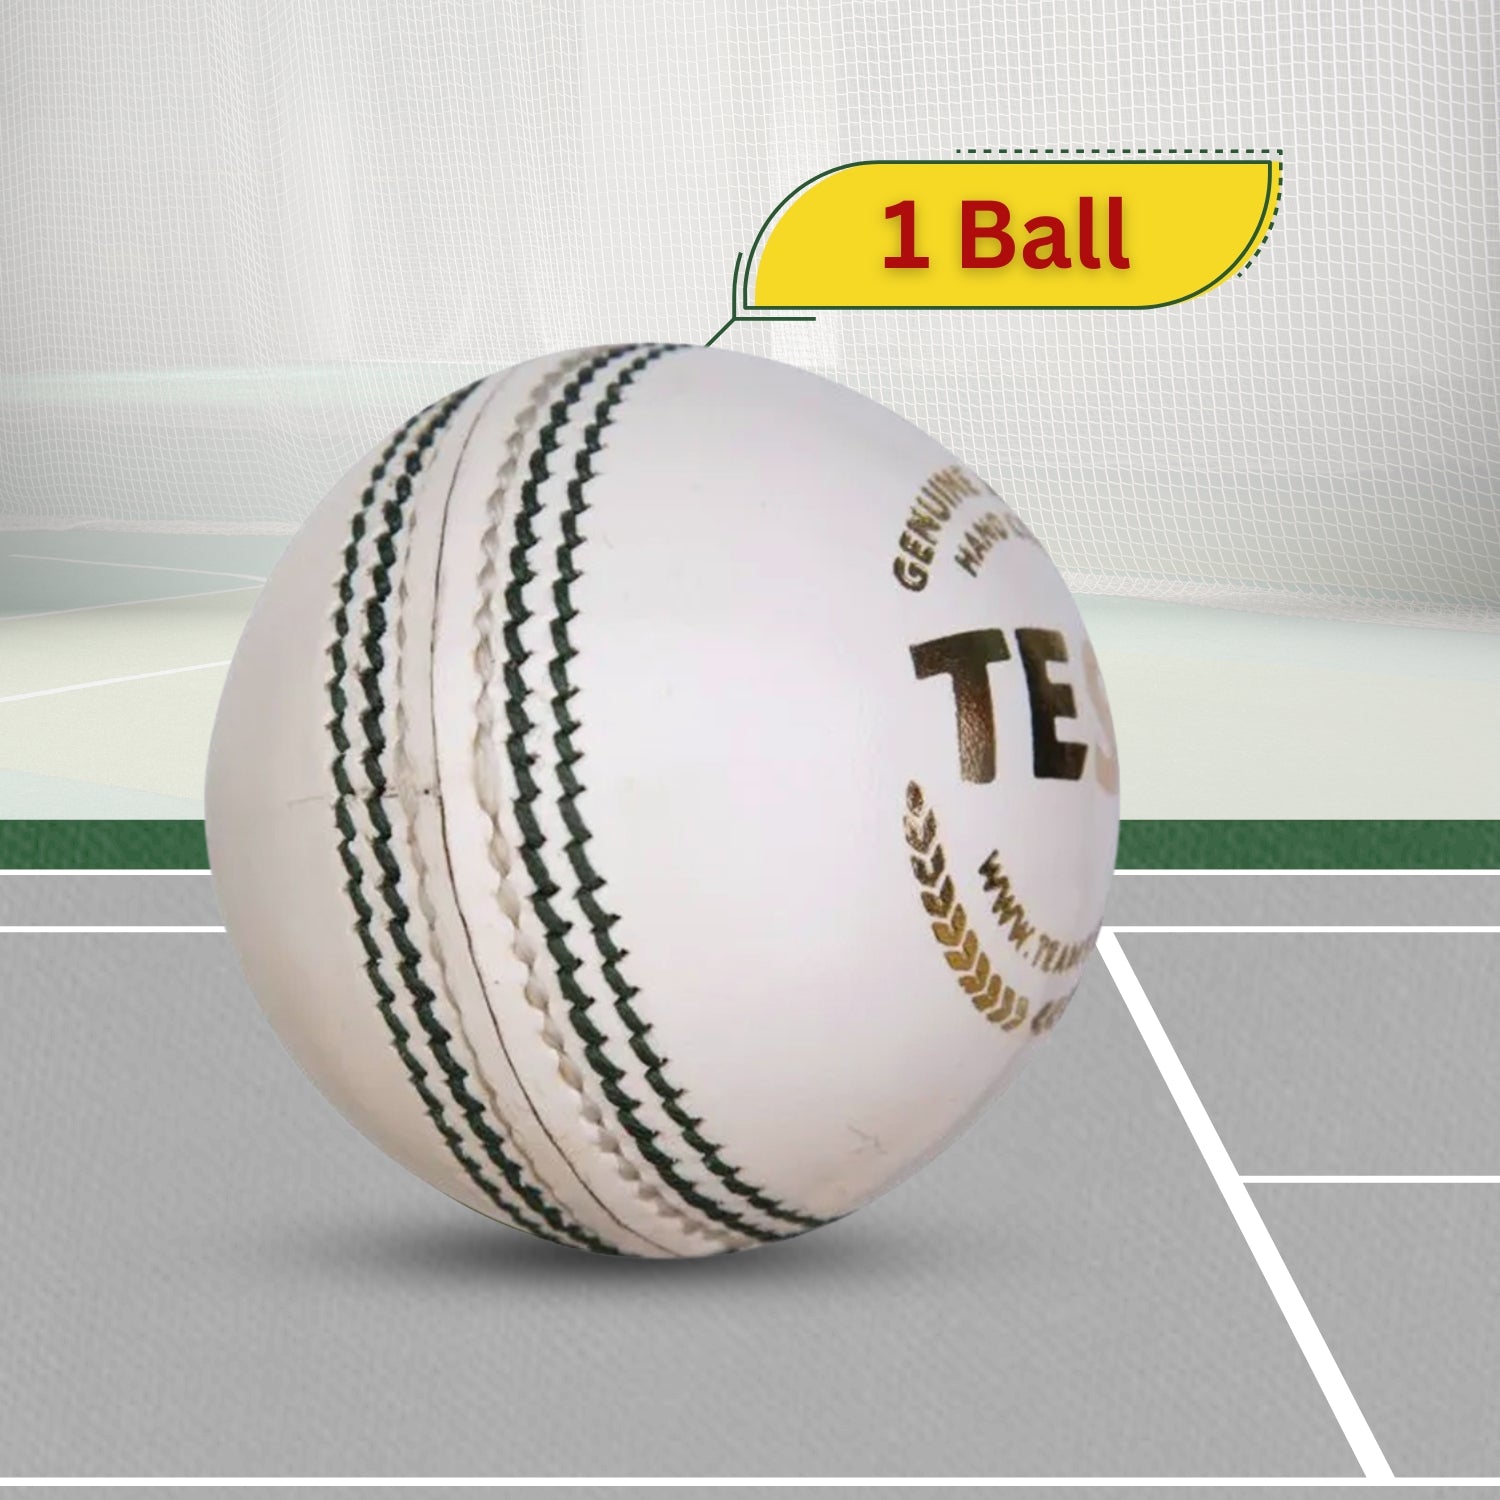 SG Test White Four- Piece Cricket Leather Ball, 1PC - Best Price online Prokicksports.com